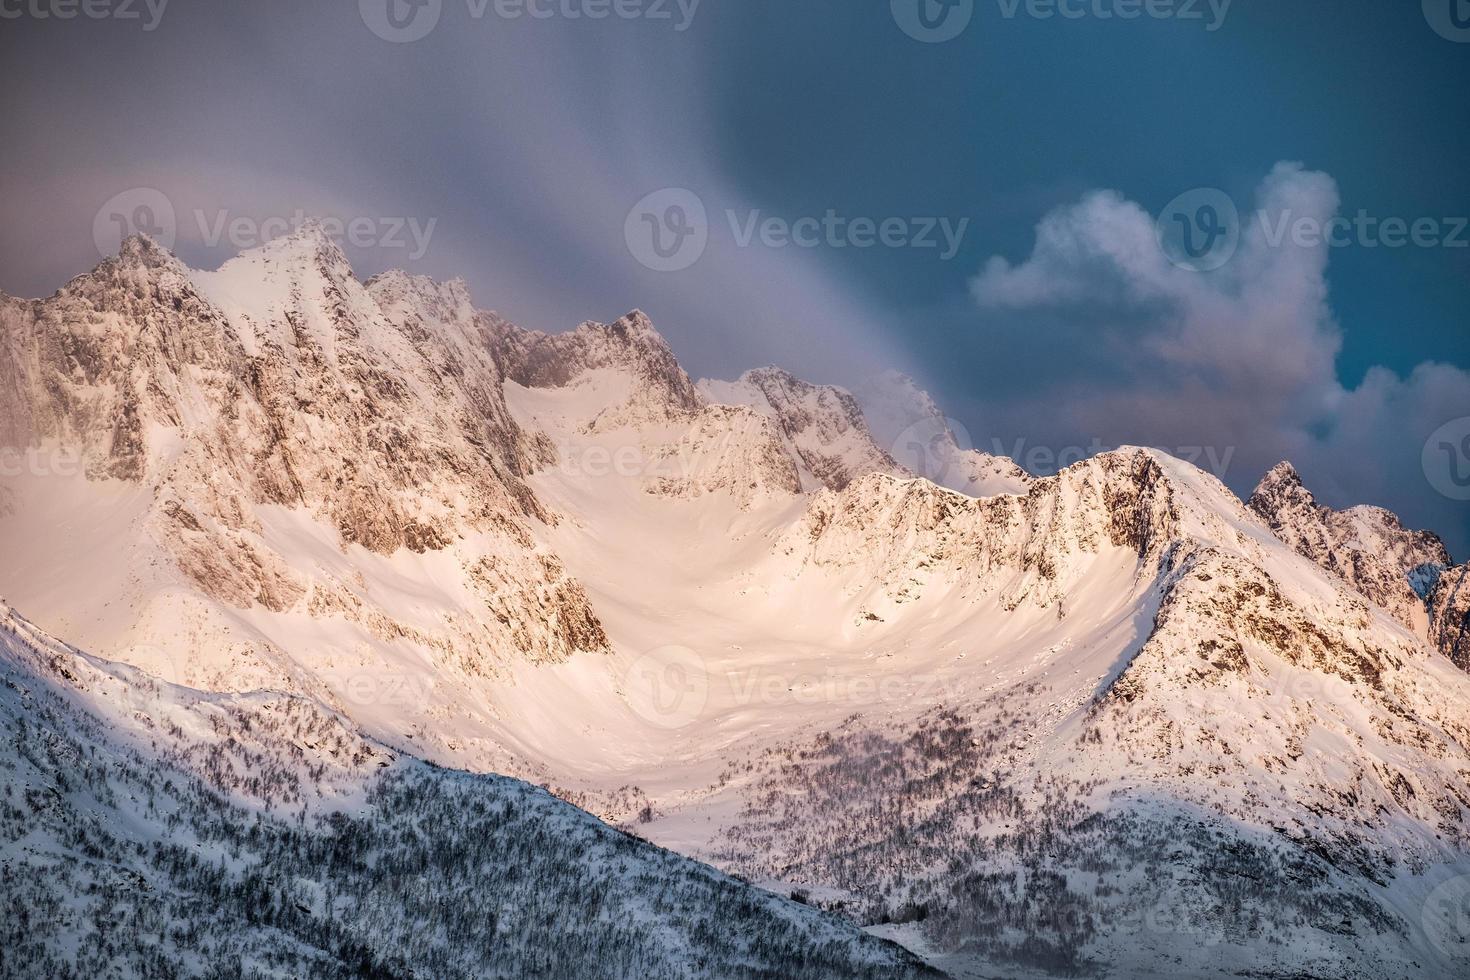 gouden zonsopgang op sneeuwberg met wolken die op bergkam blazen foto